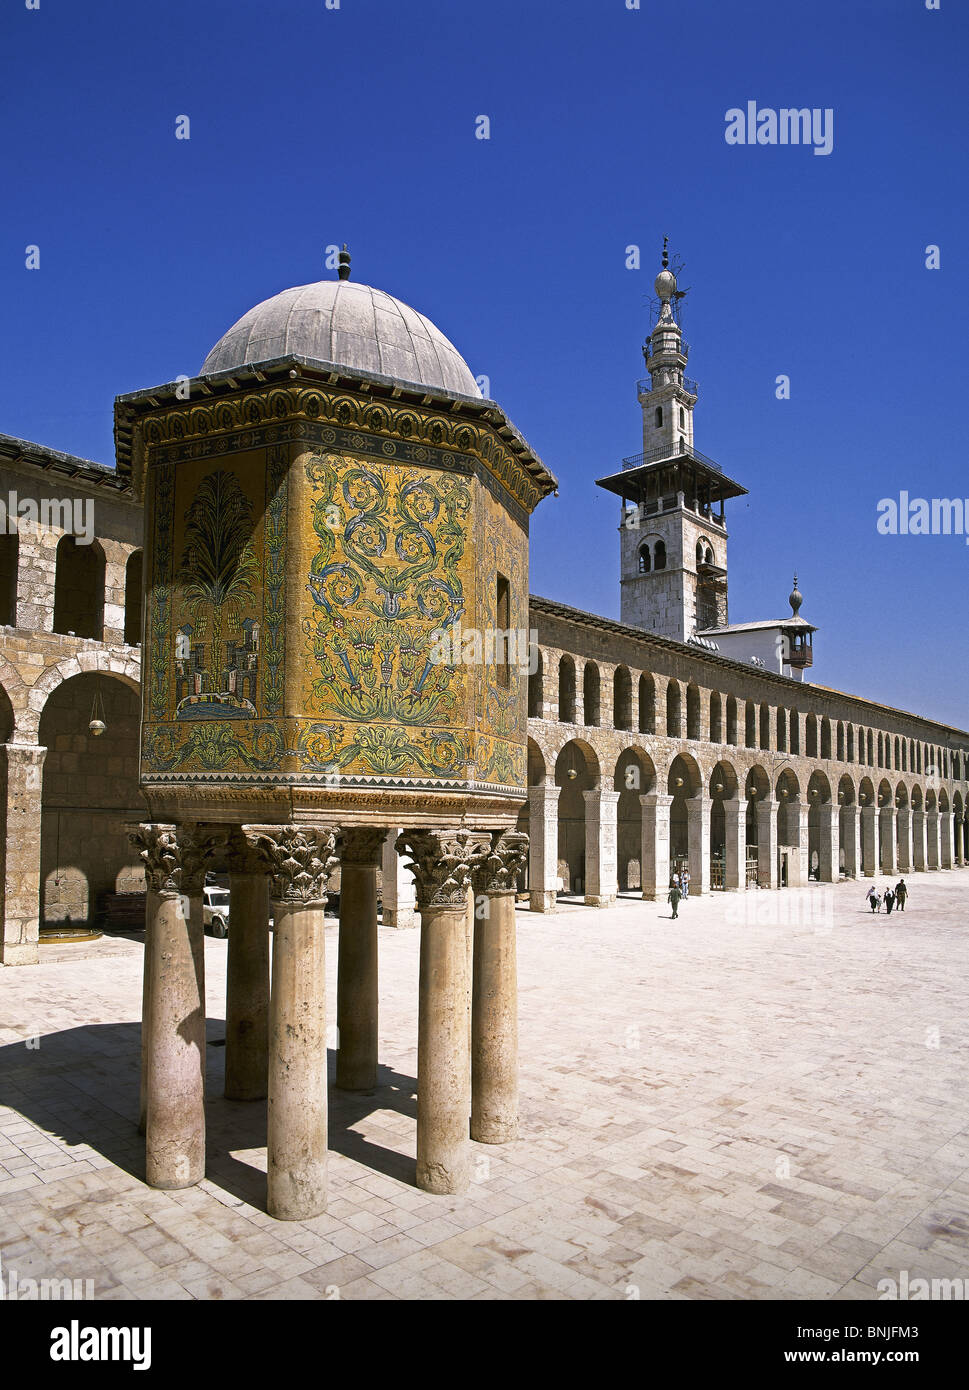 La siria Febbraio 2006 Damasco città moschea Umayyad UNESCO World Heritage Site cupola del tesoro Foto Stock